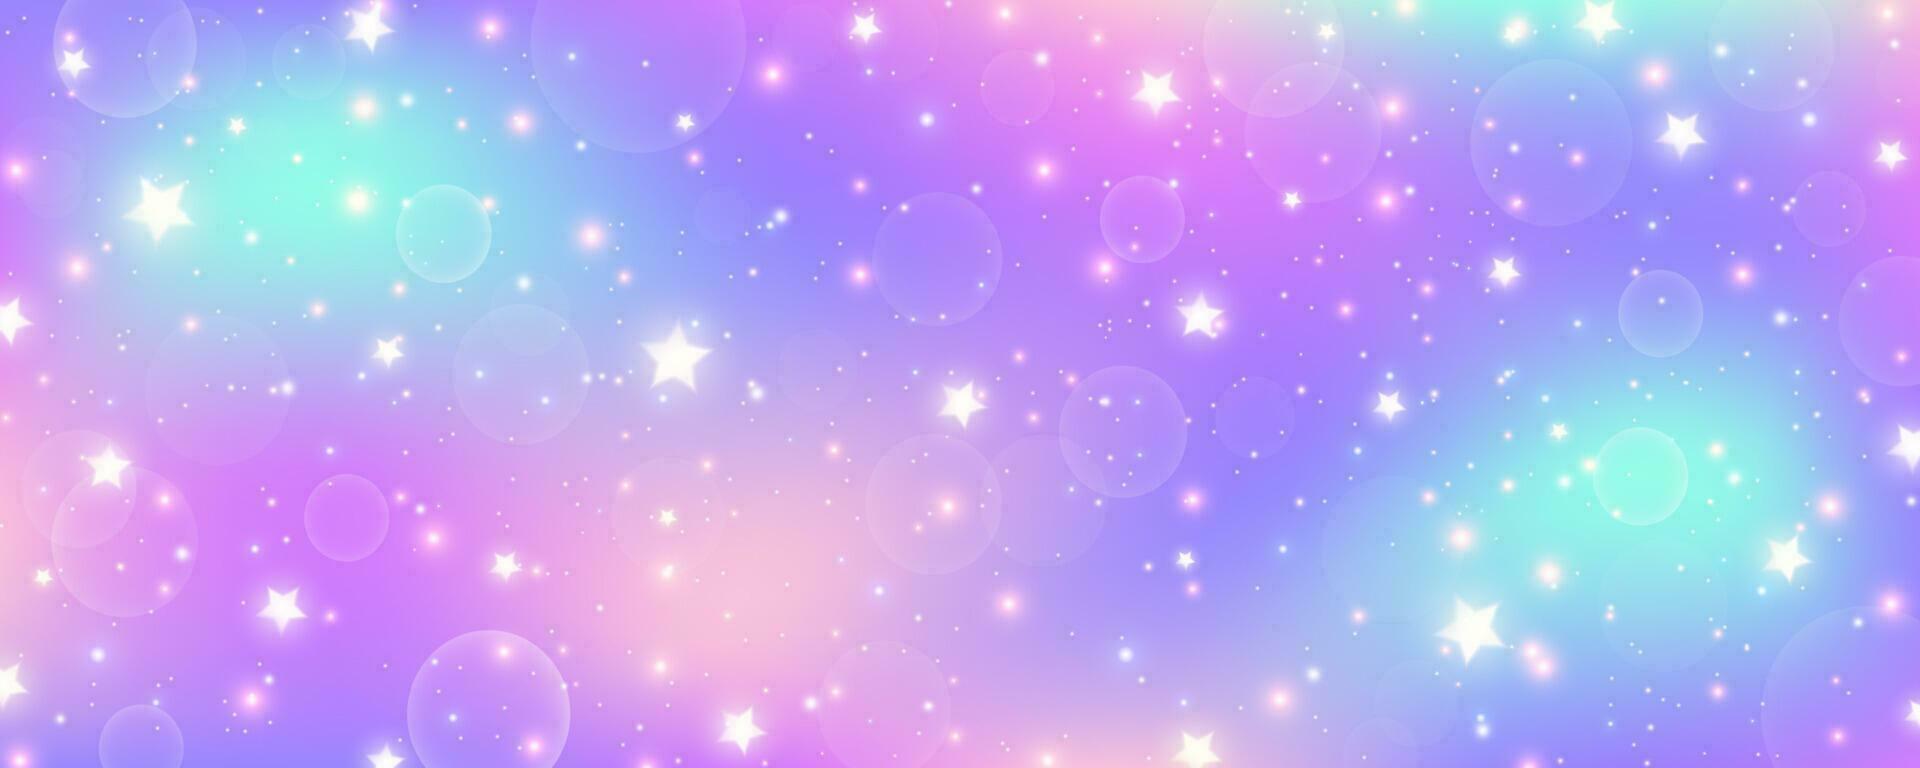 arco iris pastel antecedentes. unicornio cielo con reluciente cielo. caramelo galaxia con acuarela ligero textura. femenino linda magia fondo de pantalla. holográfico vector resumen ilustración.